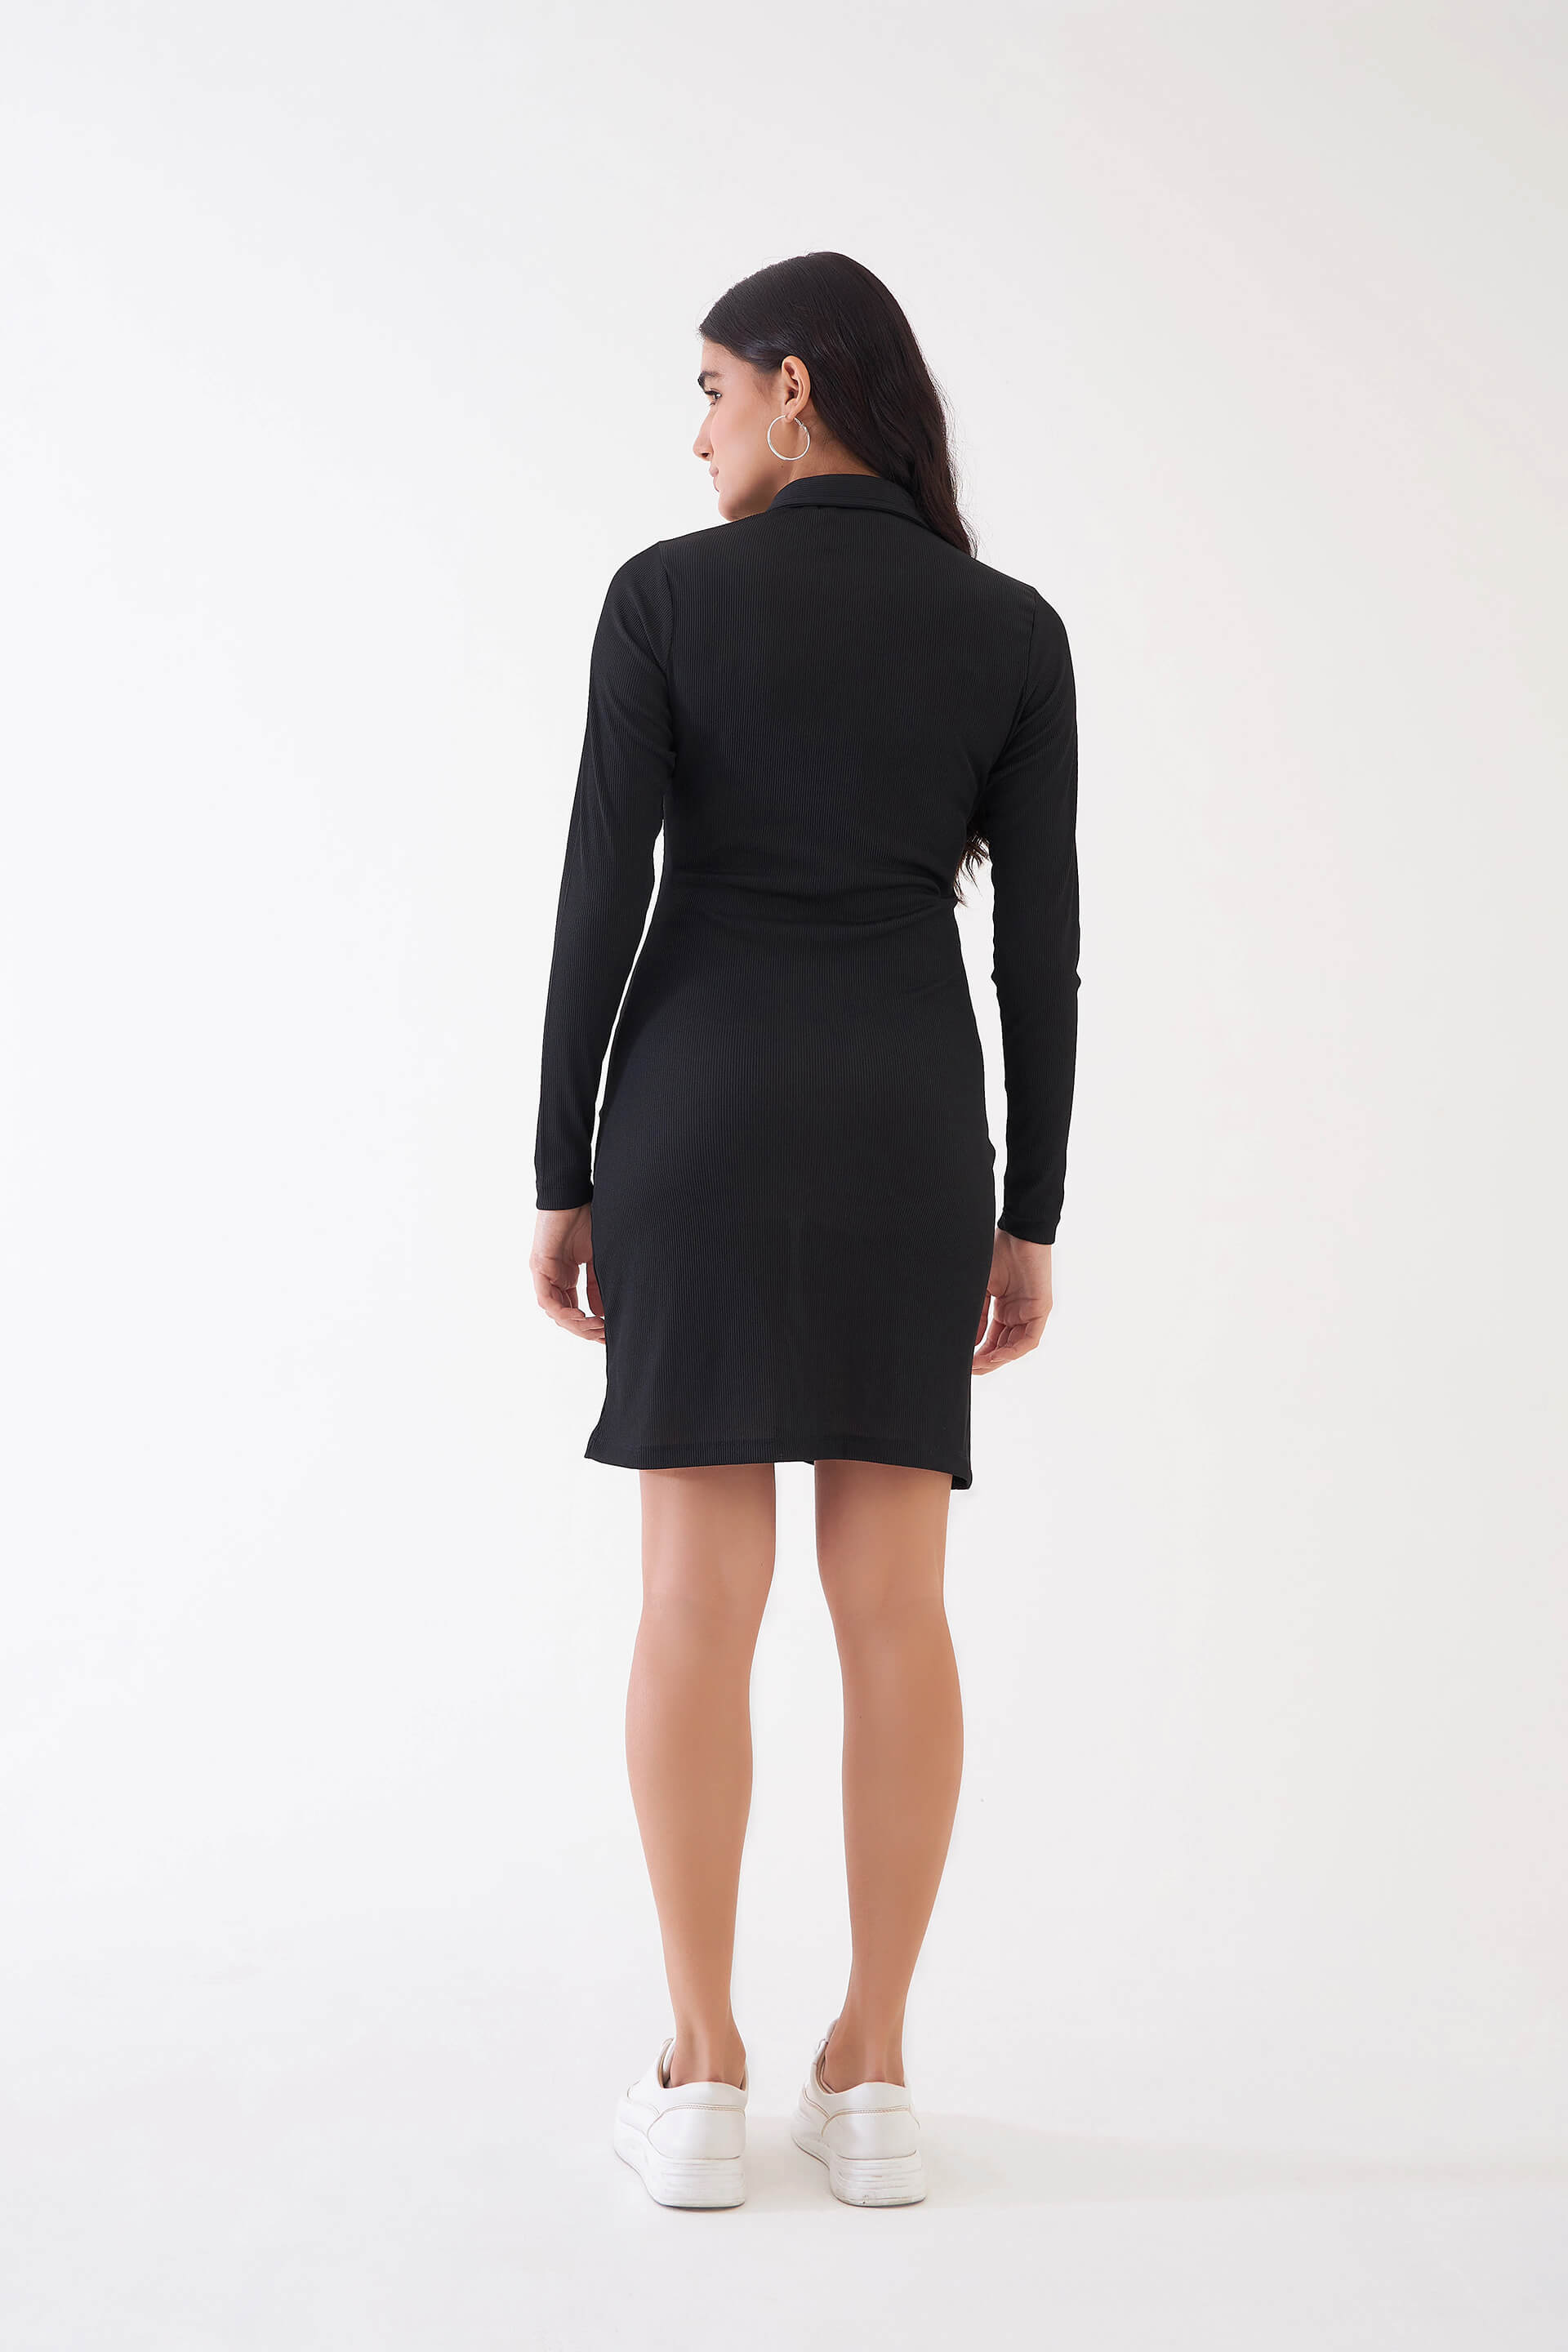 Daphne Ruched Bodycon Dress - Black